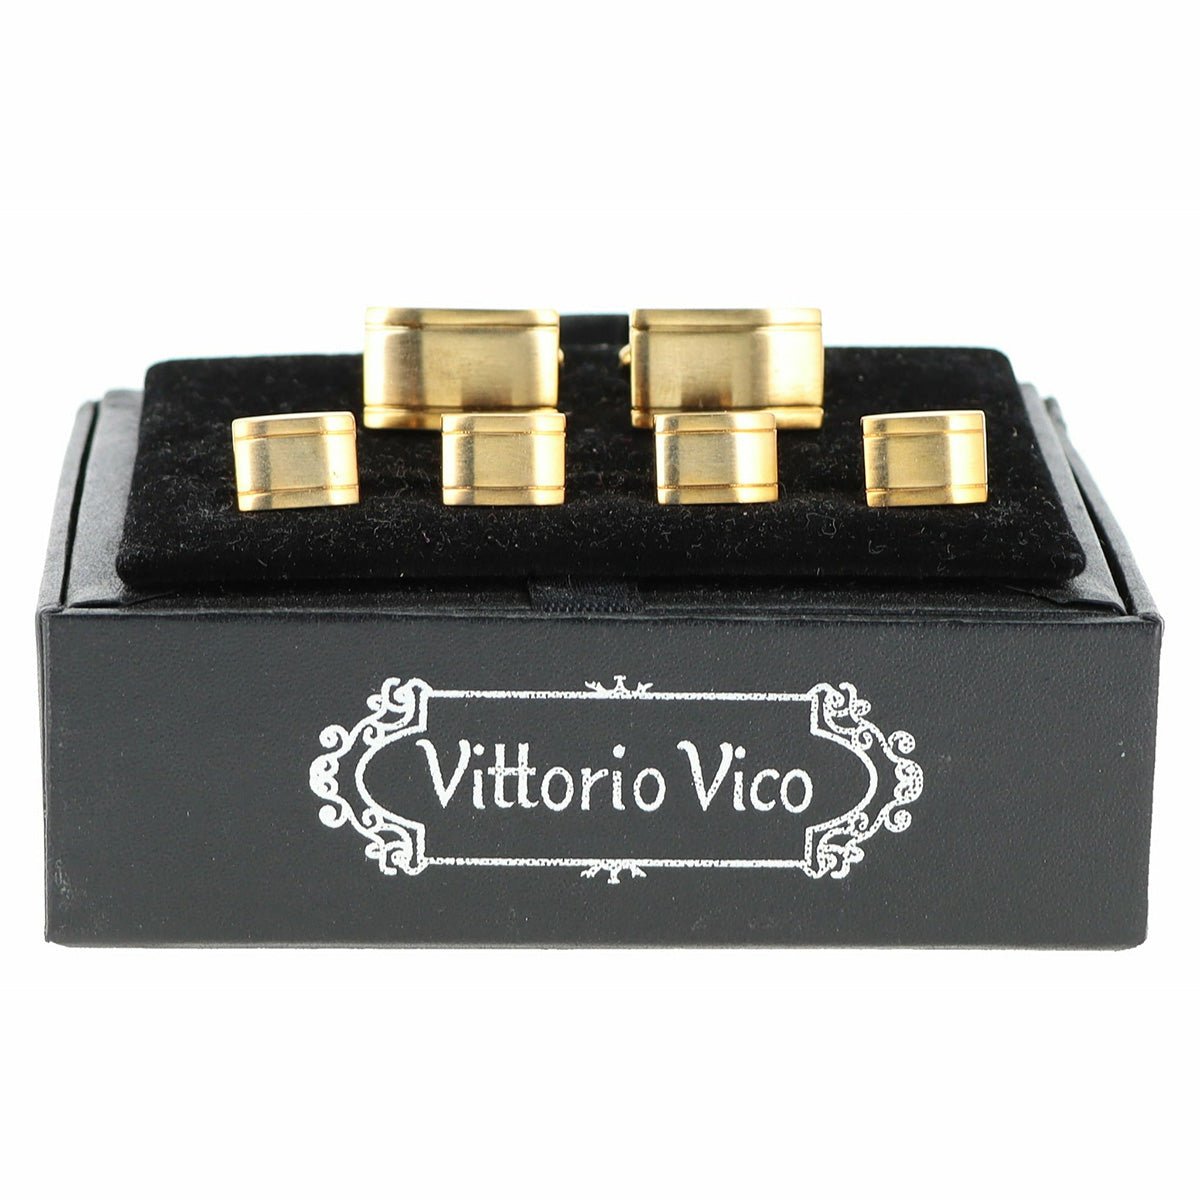 Vittorio Vico Gold Cufflinks & Stud Sets by Classy Cufflinks - fs-157-gold - Classy Cufflinks